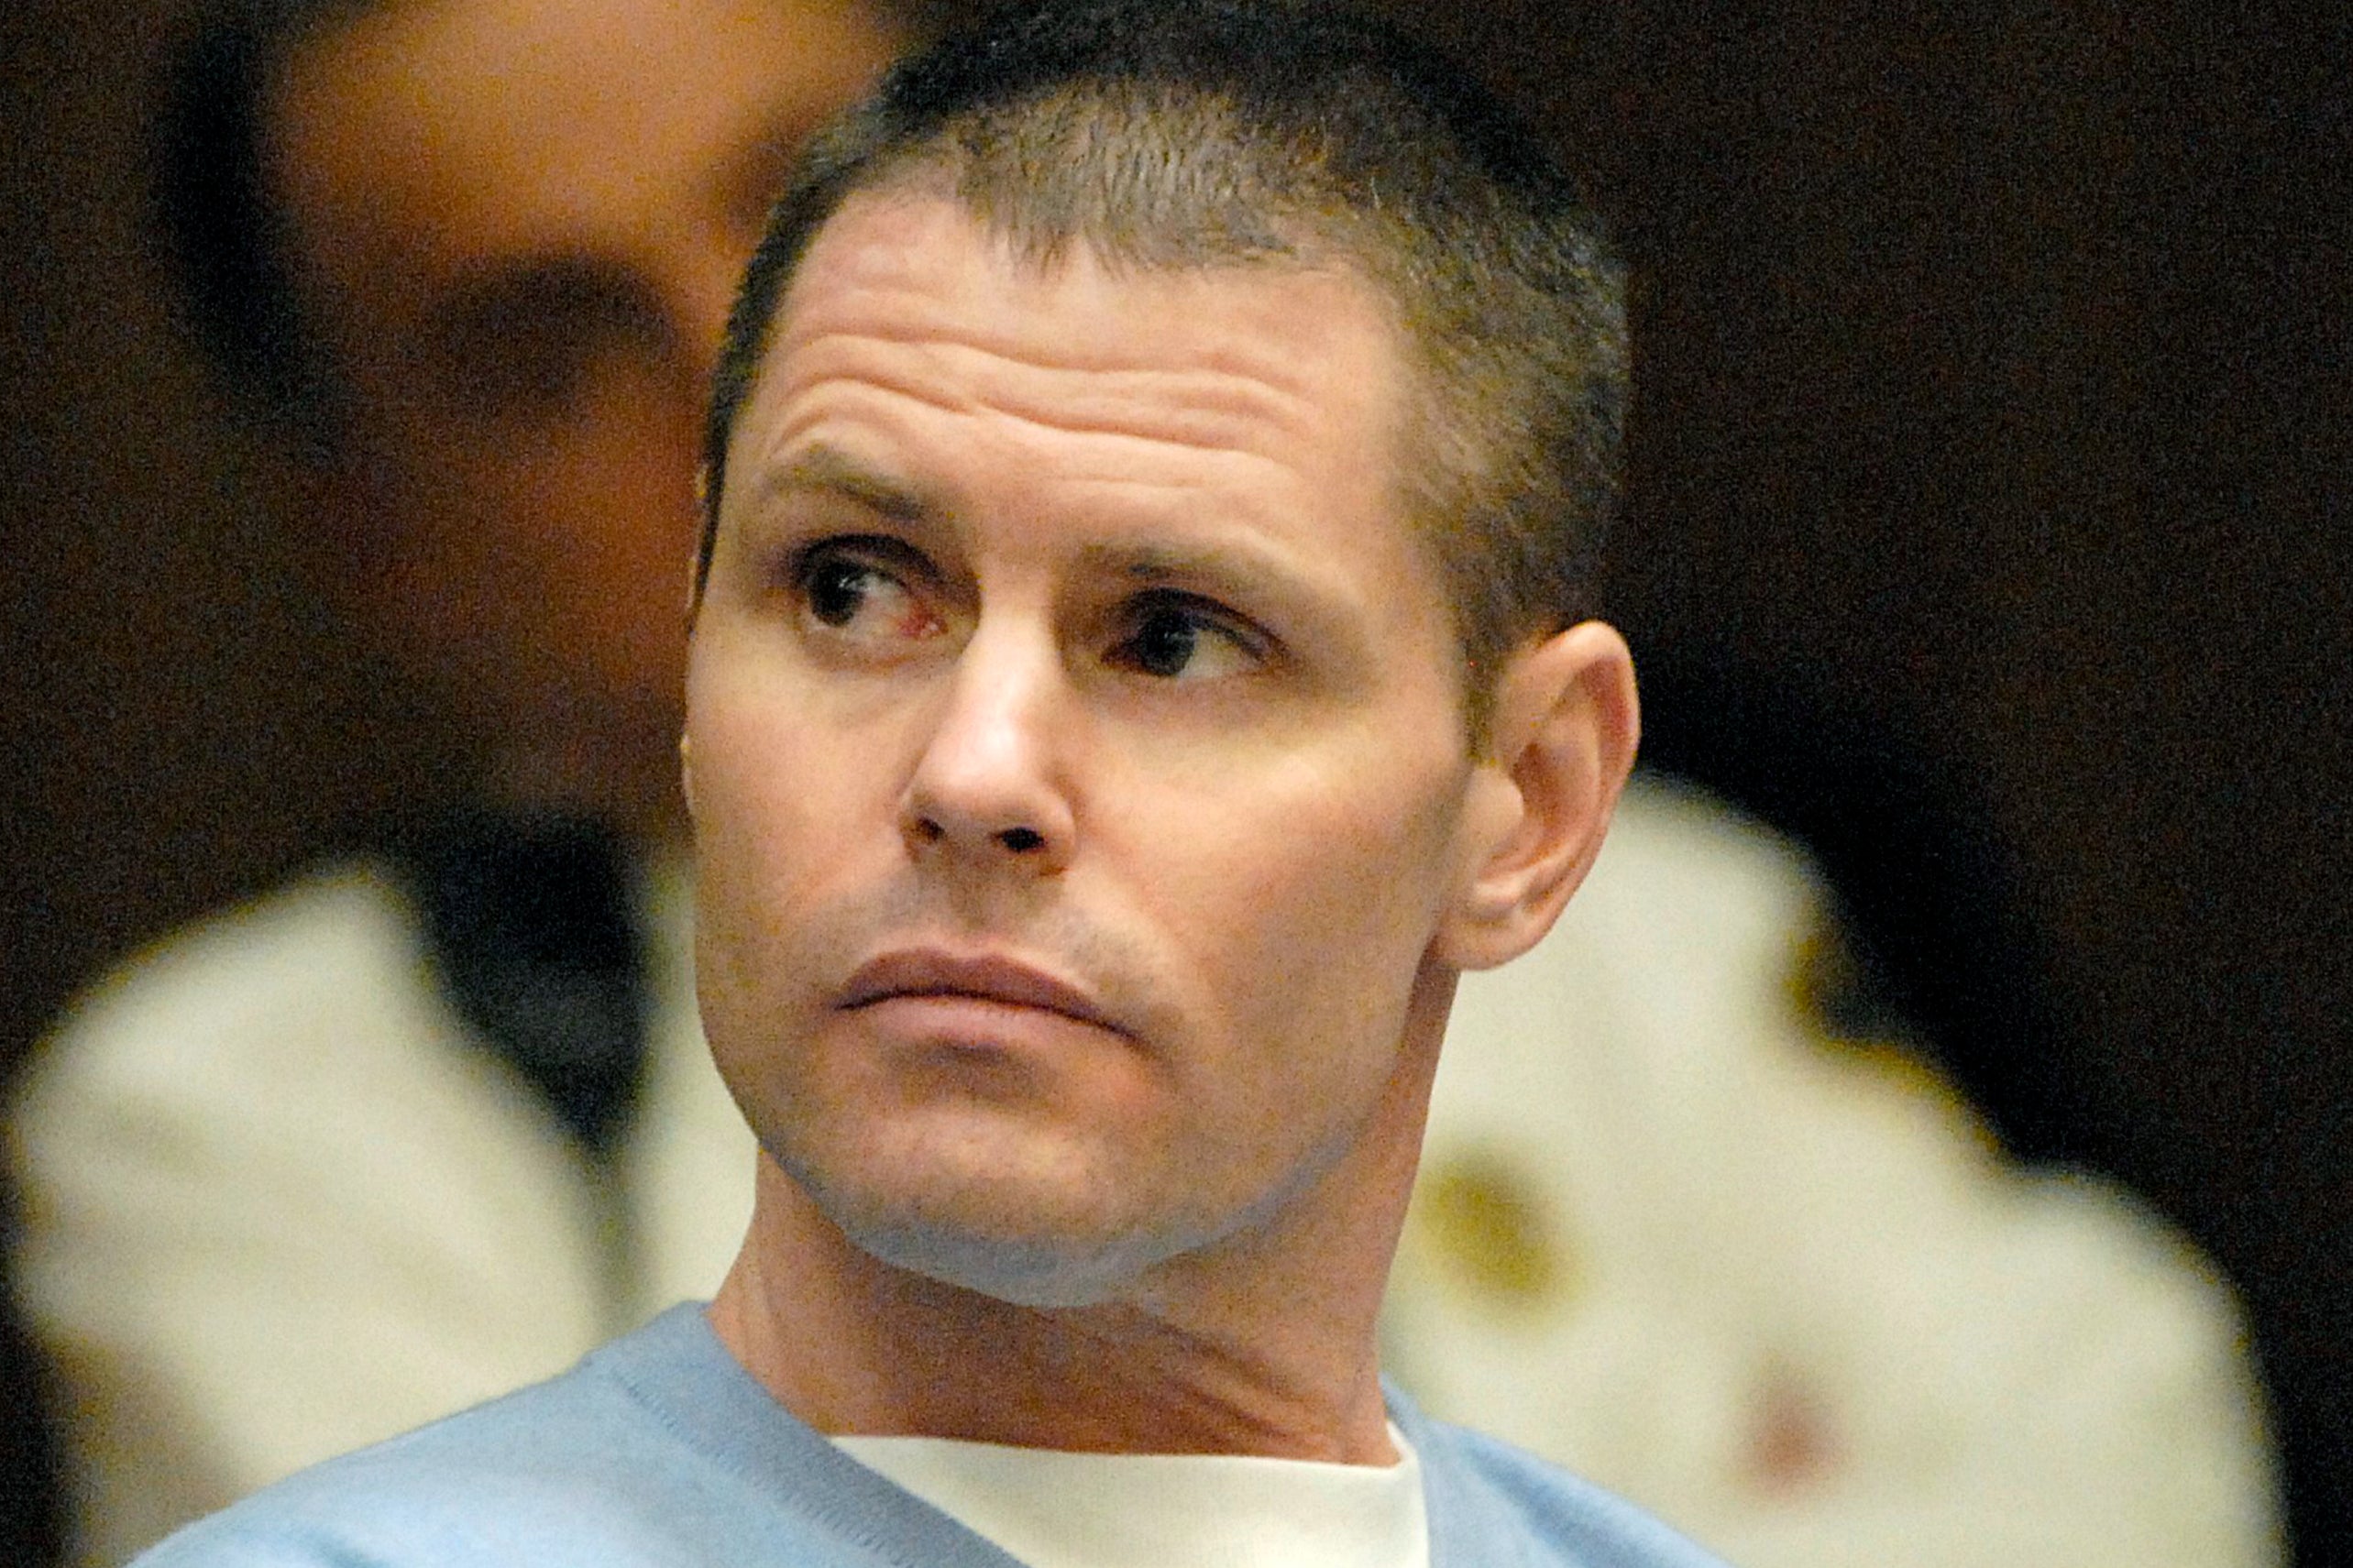 Fotios ‘Freddy’ Geas appears for a court proceeding in his defense in the Al Bruno murder case, April 14, 2009, in Springfield, Massachusetts